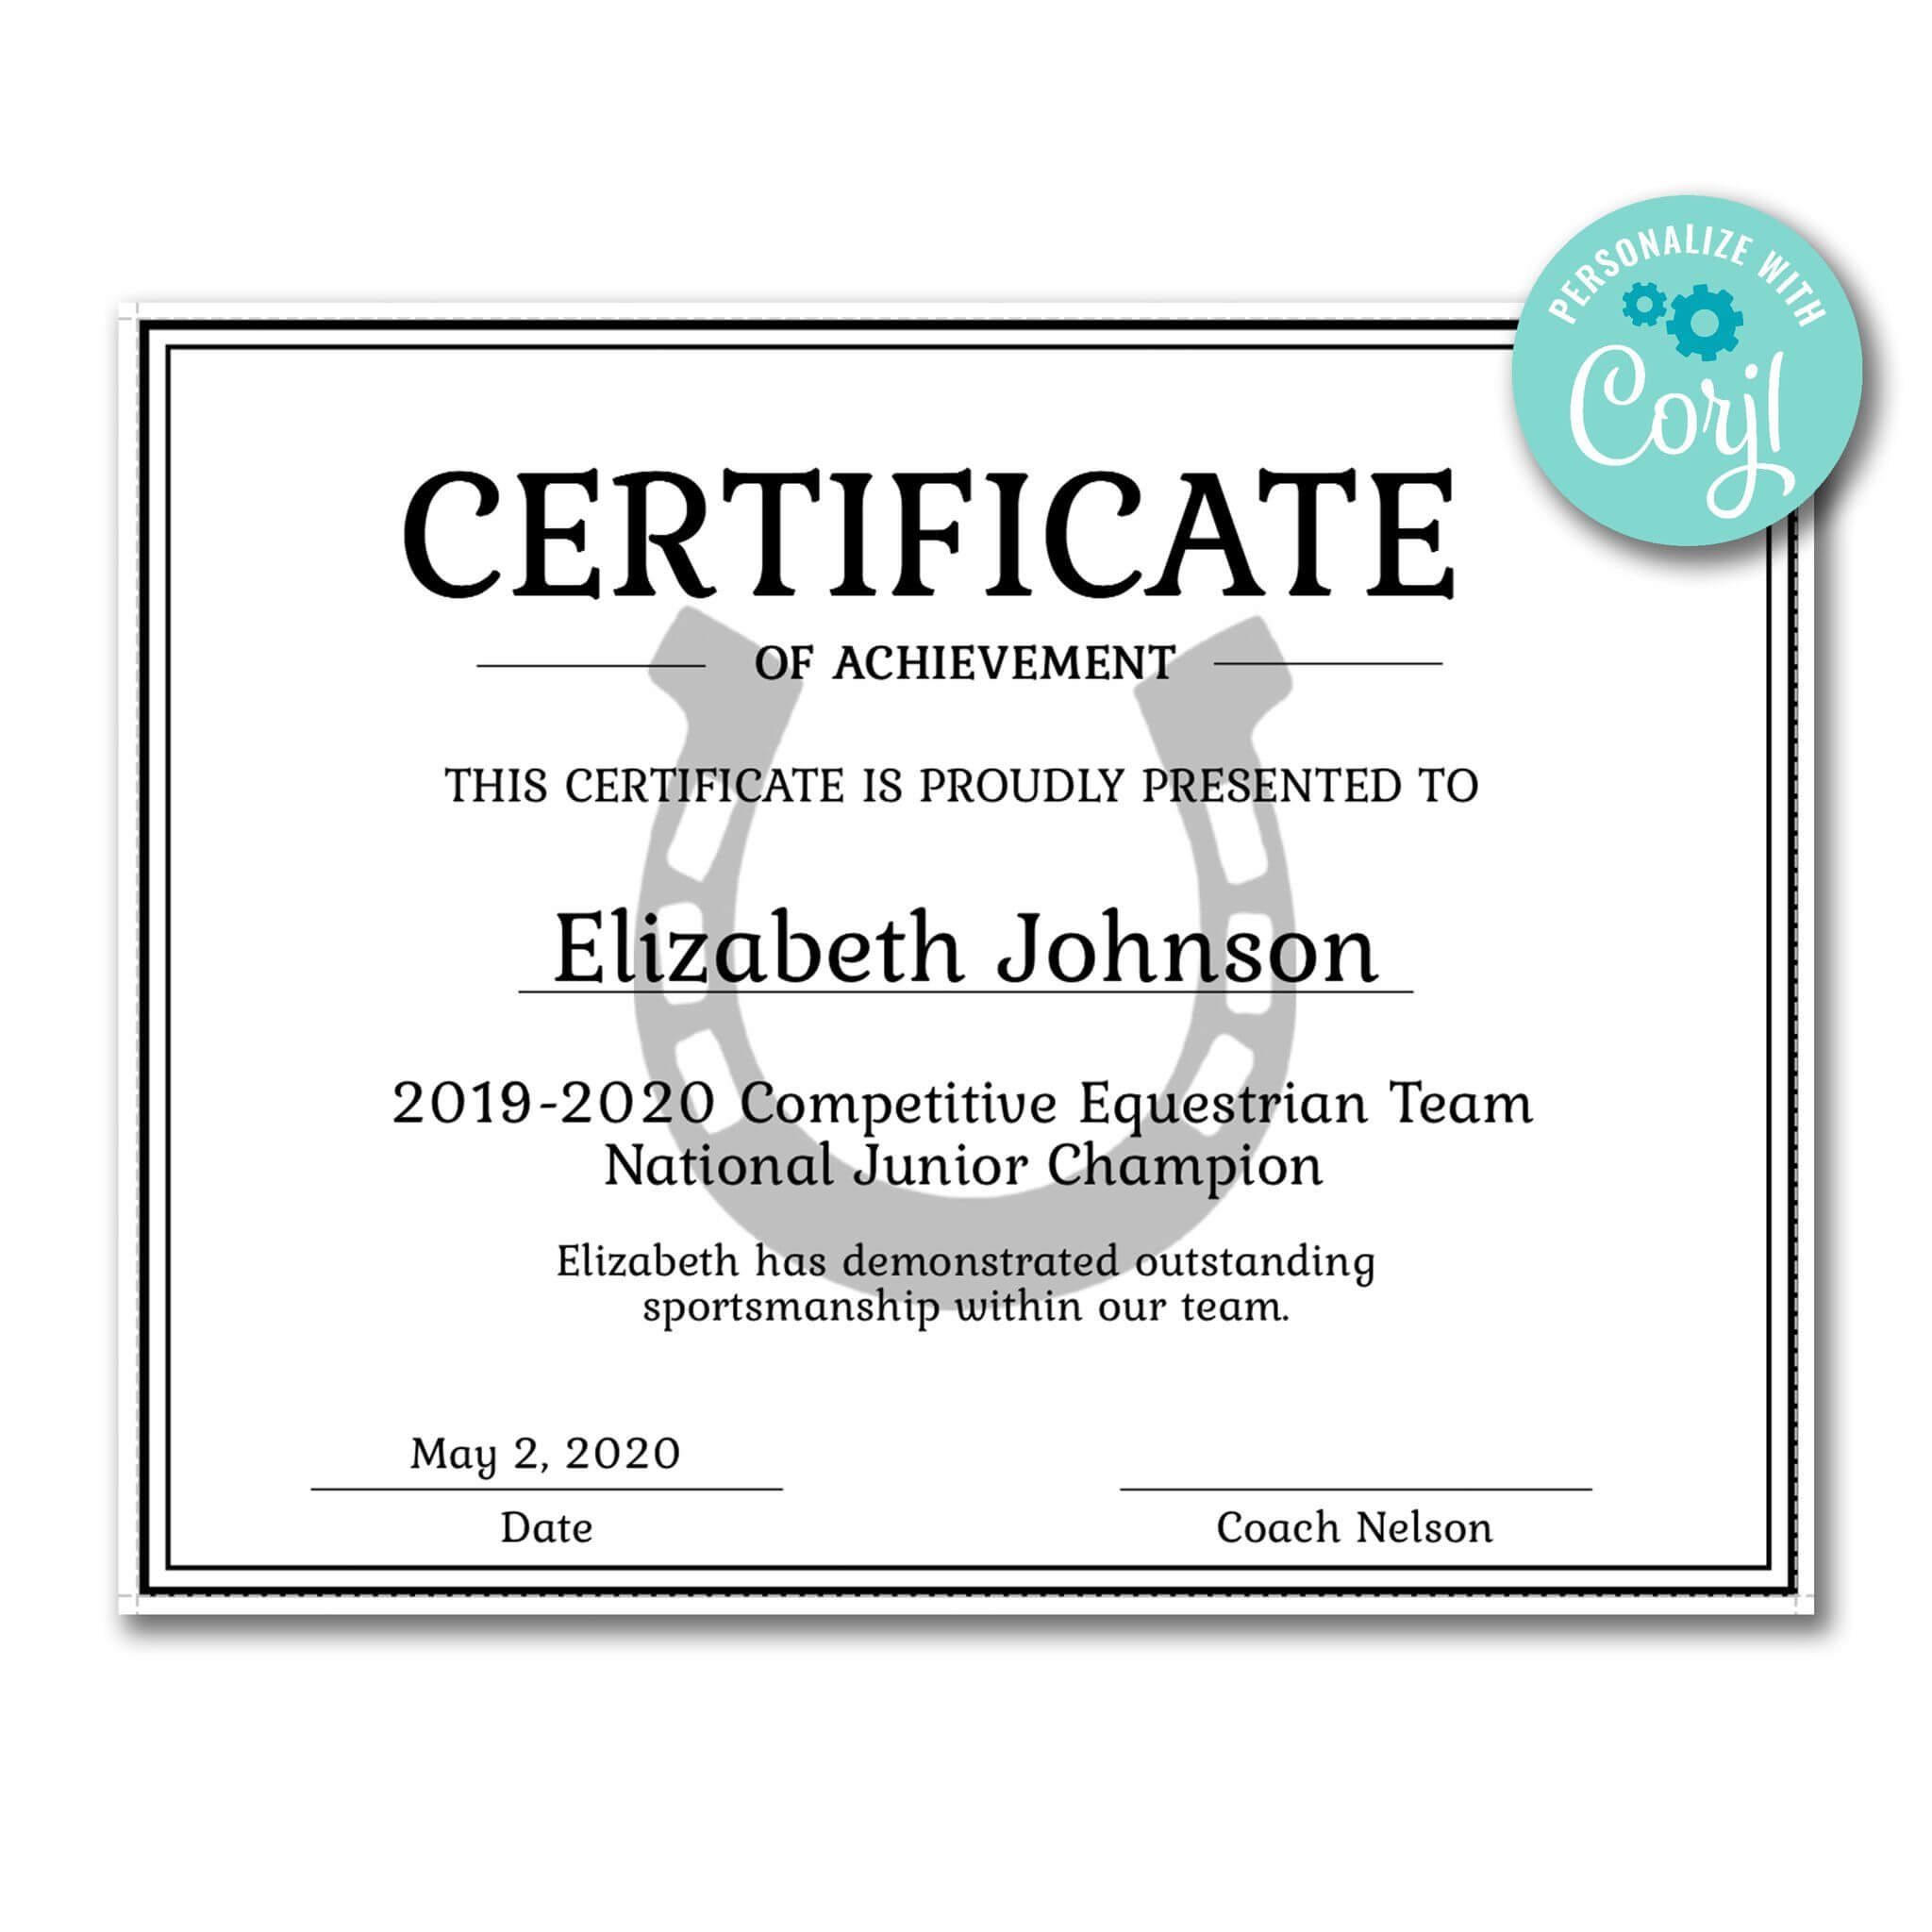 Horseshoe Certificate | Certificate Templates, Certificate Inside Basketball Camp Certificate Template